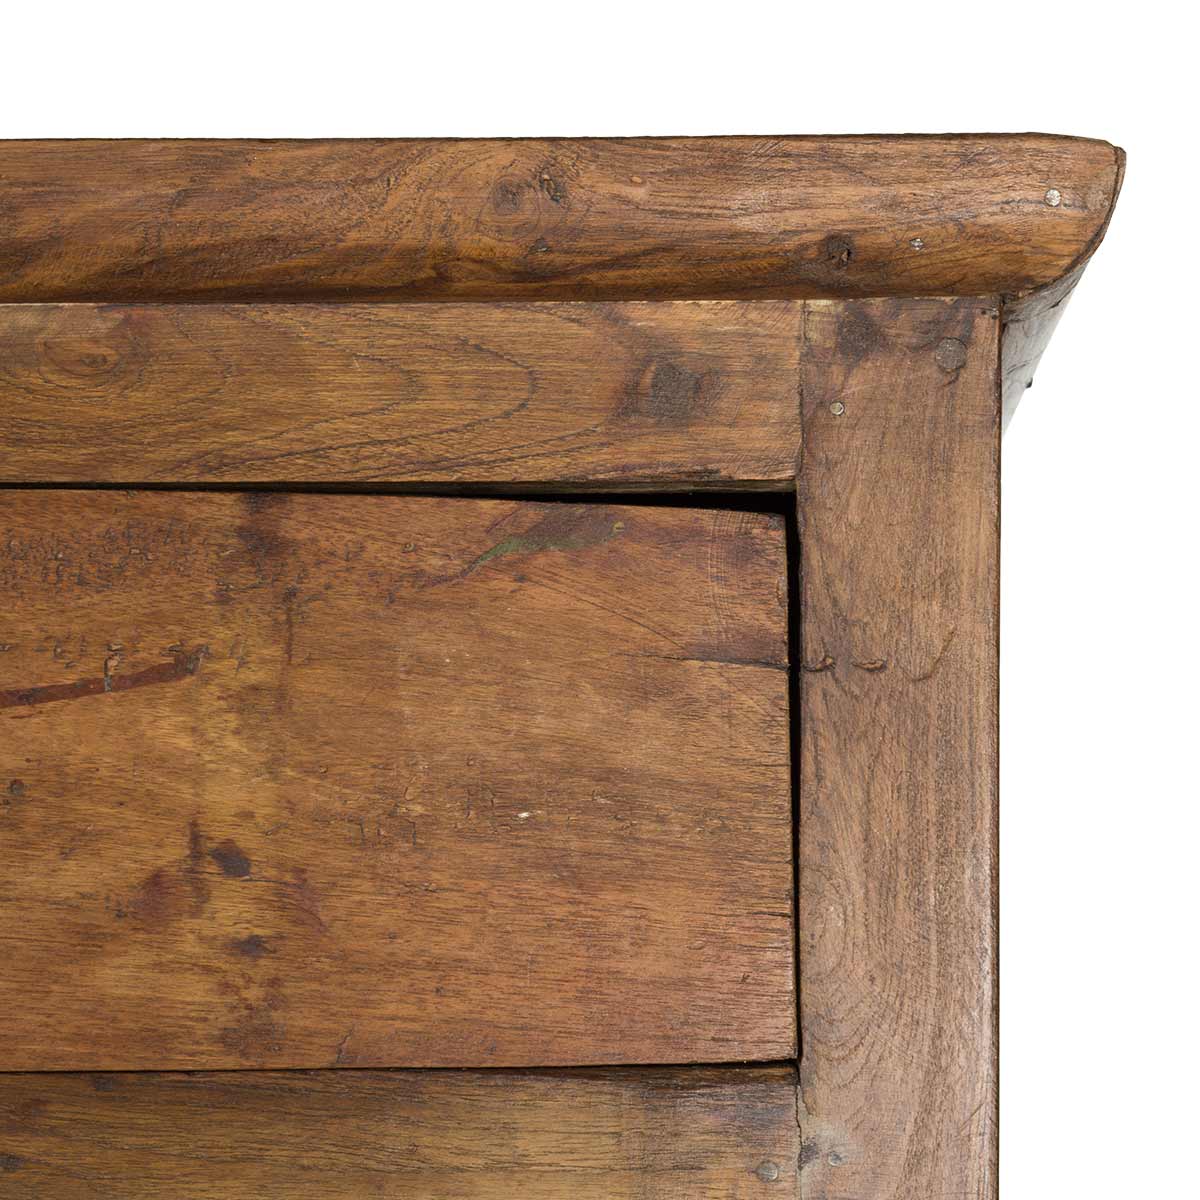 Endulzar Asociar bandeja Muebles antiguos de madera.